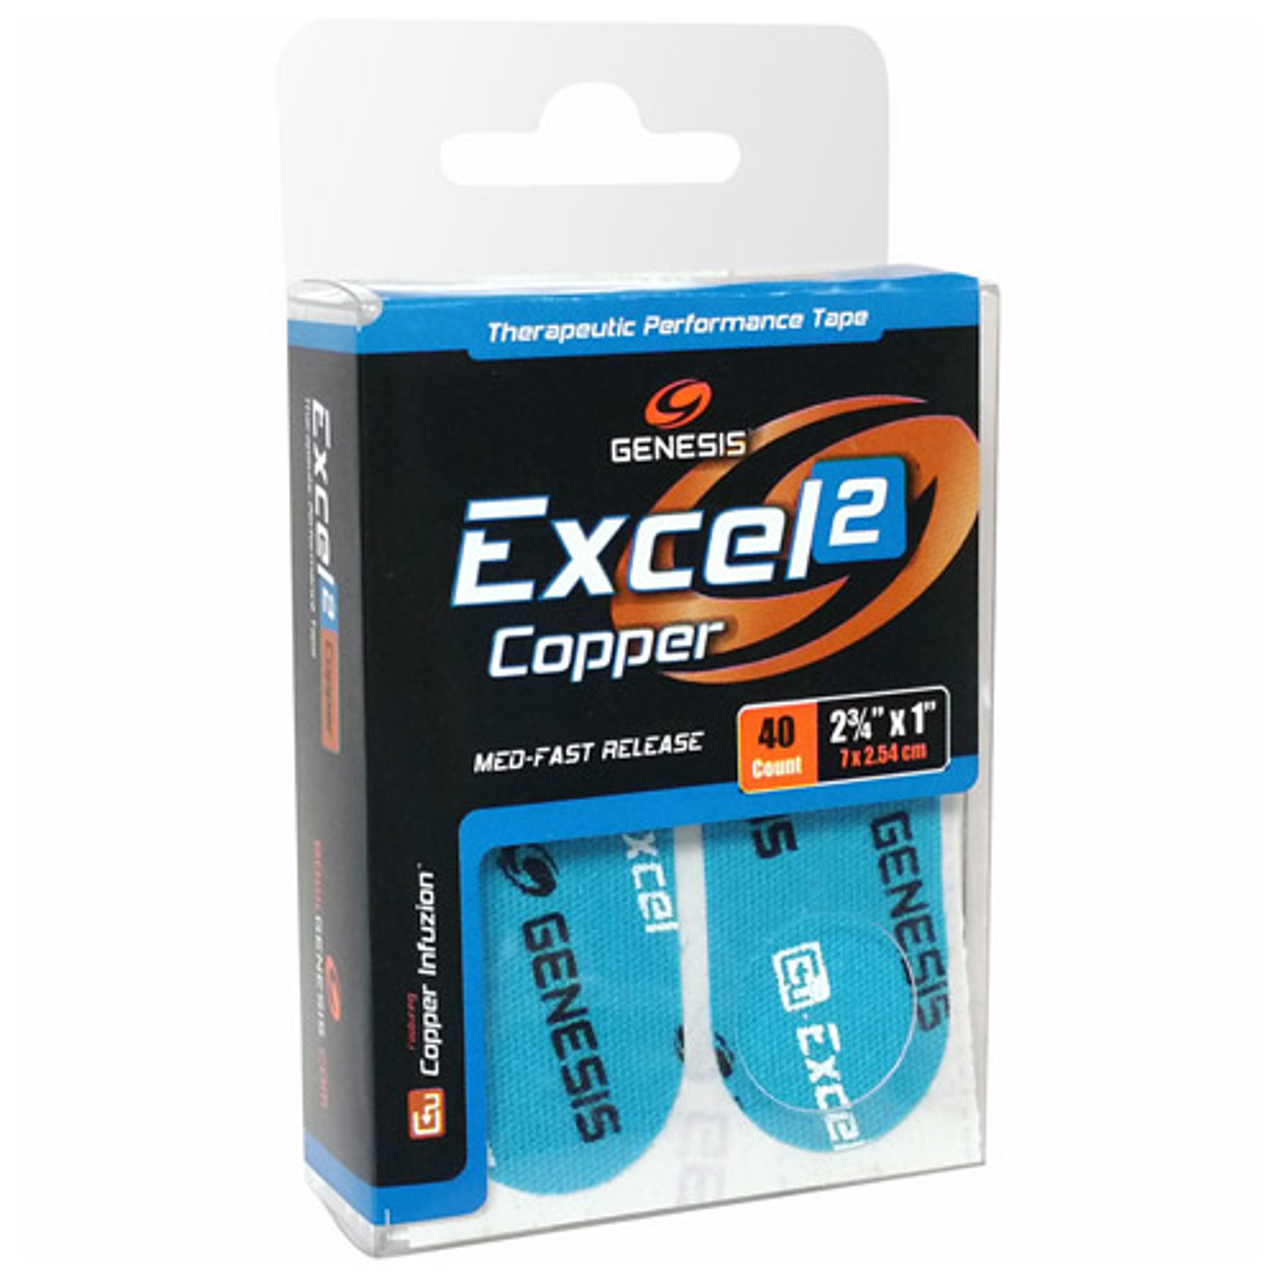 Genesis Excel 2 Copper Performance Tape Blue